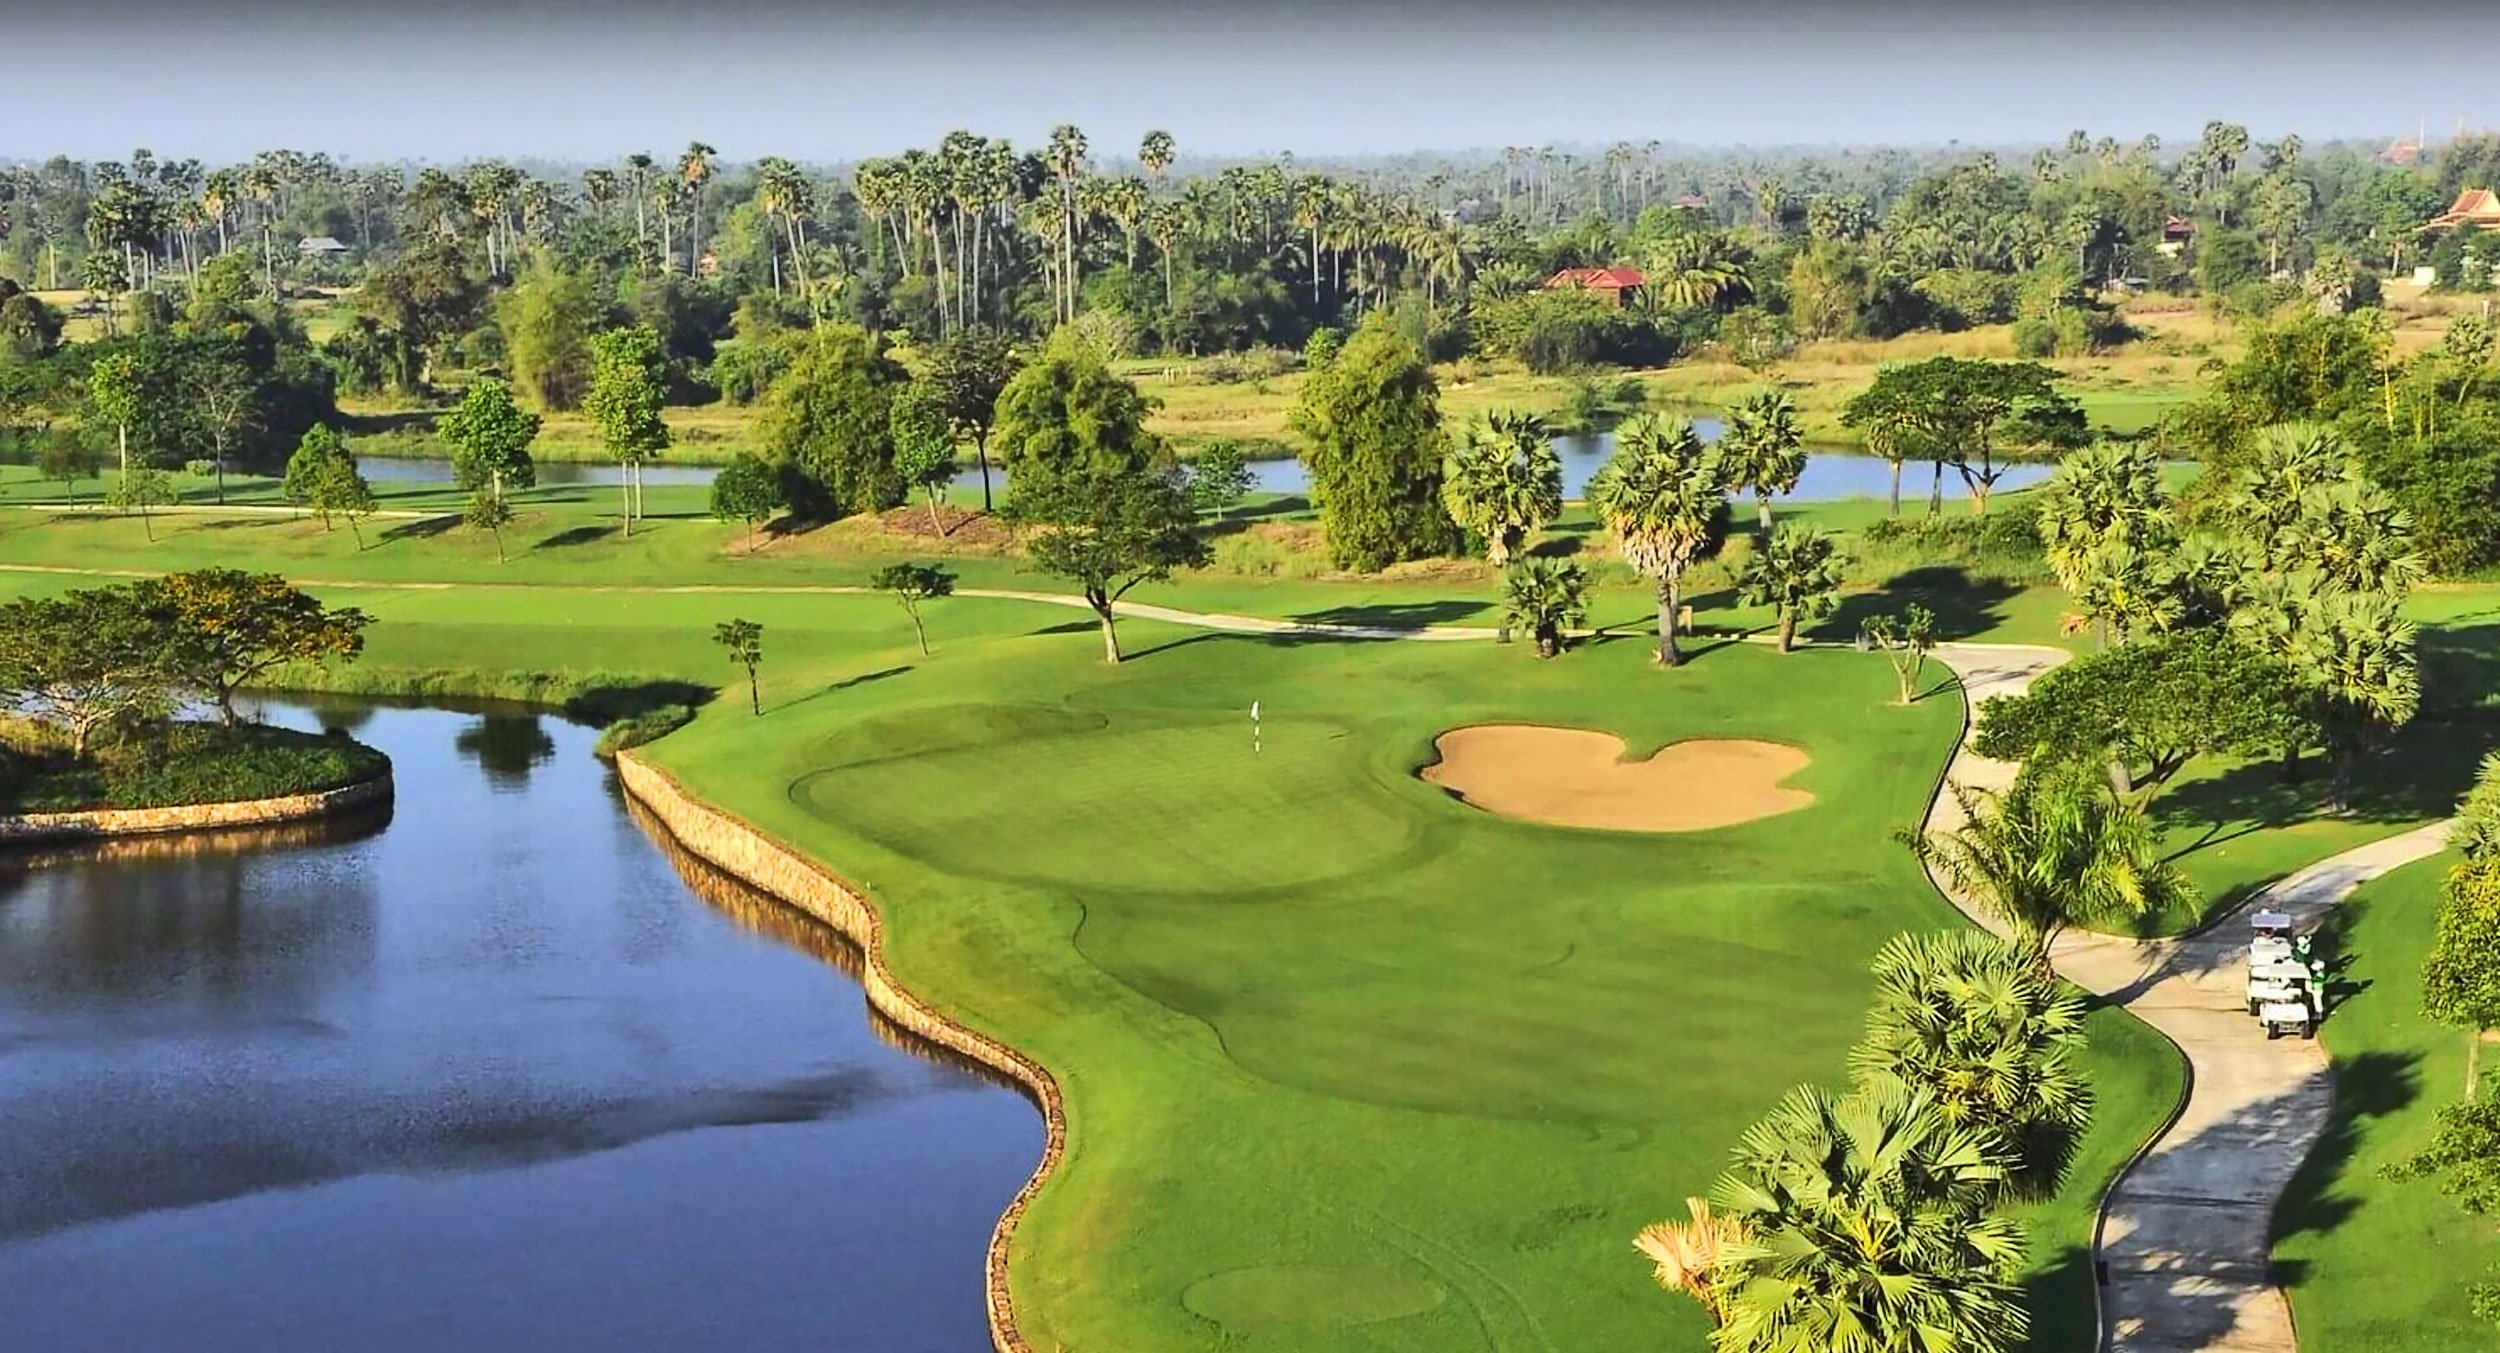 Angkor-Golf-Resort-Course-Image-02.jpg